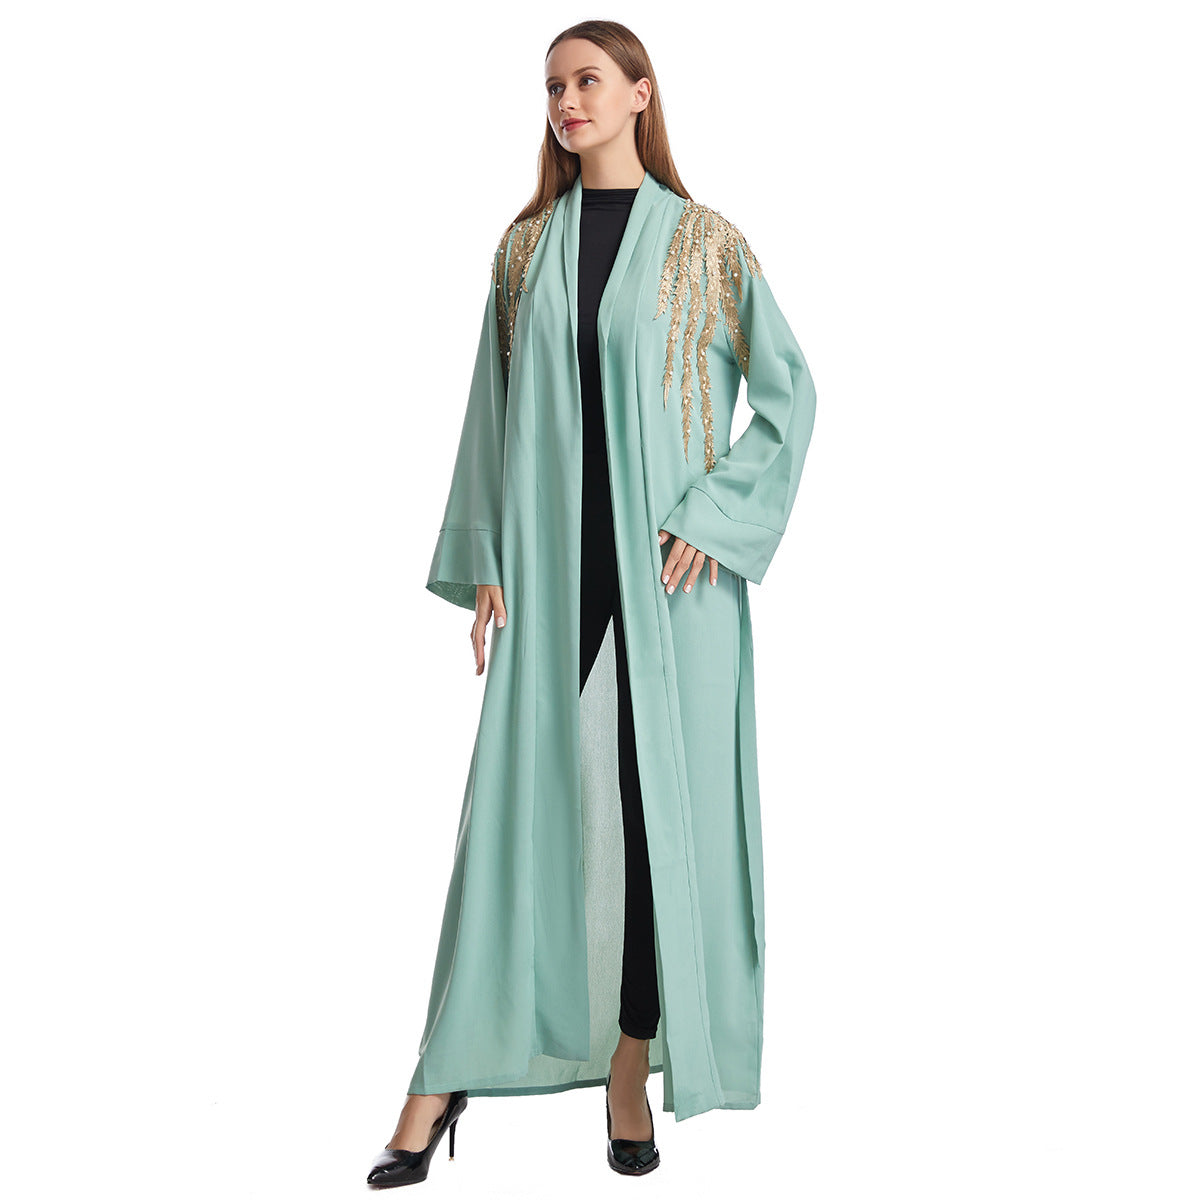 Women's Plain Open Abaya Robe